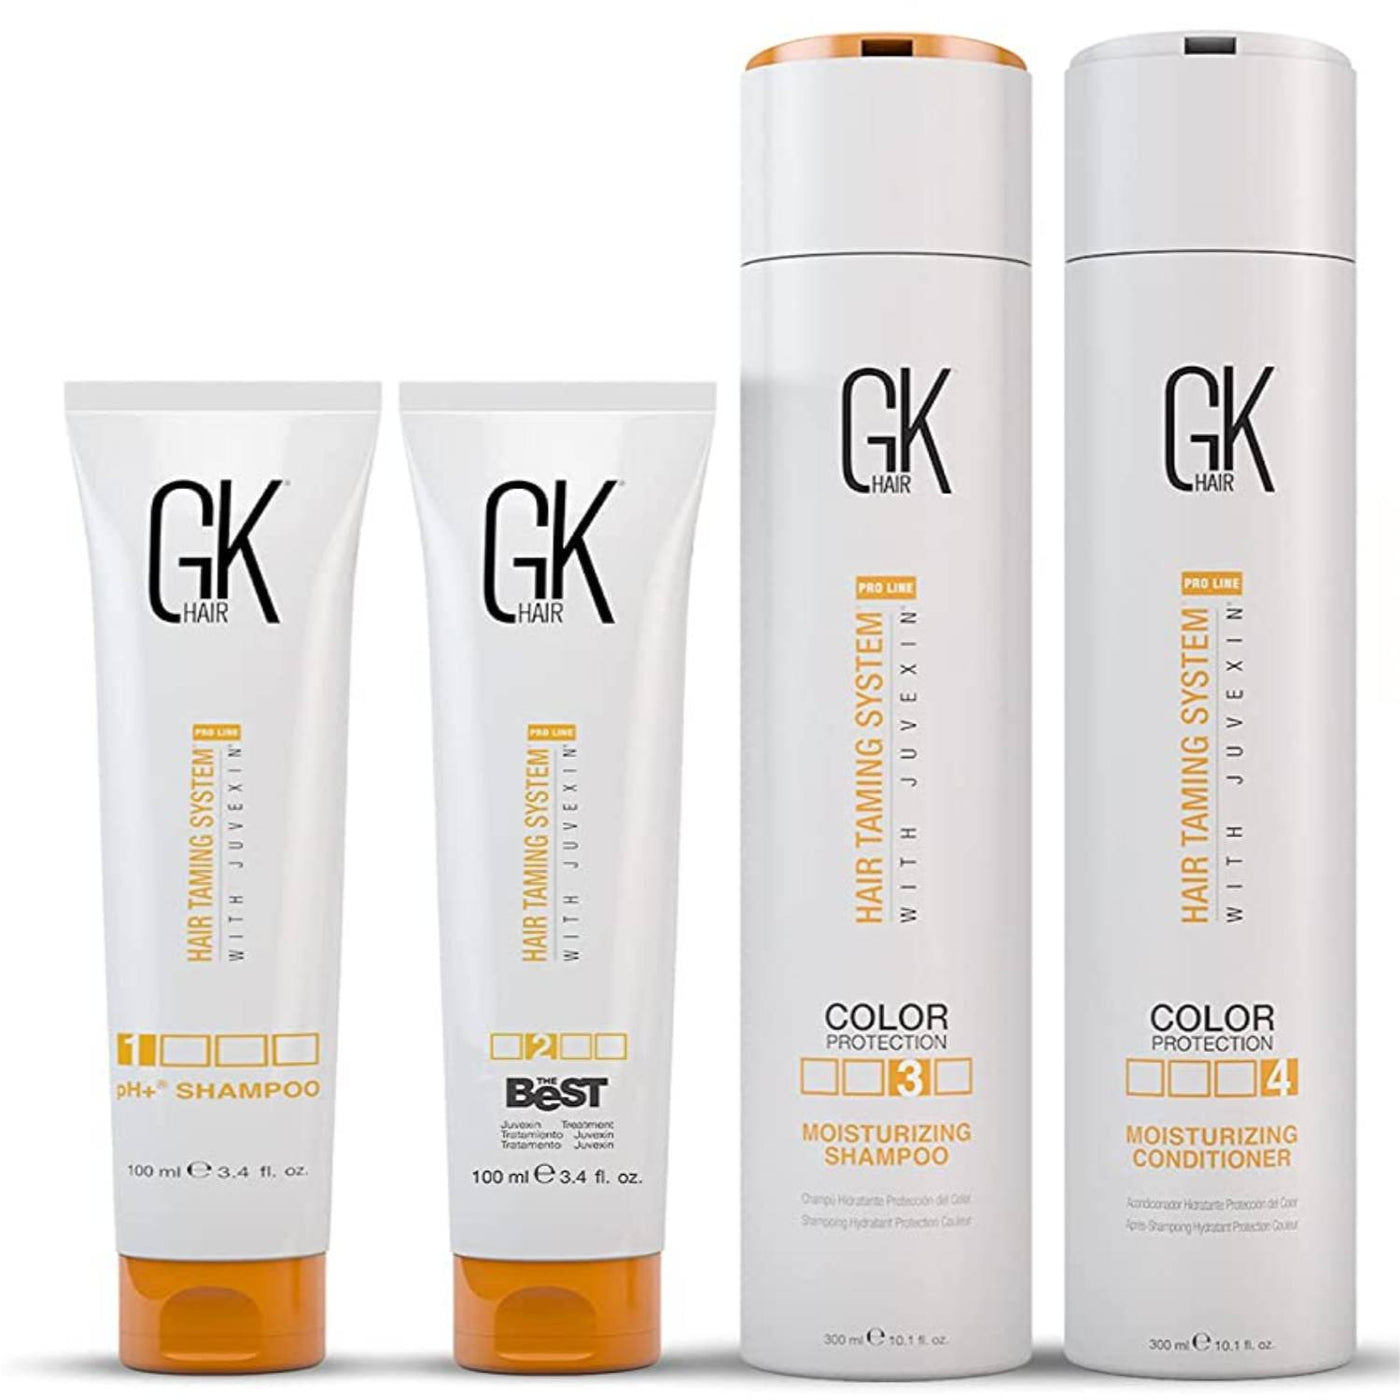 Shop The BEST Professional Hair Kit Online from GK Hair – GK Hair USA